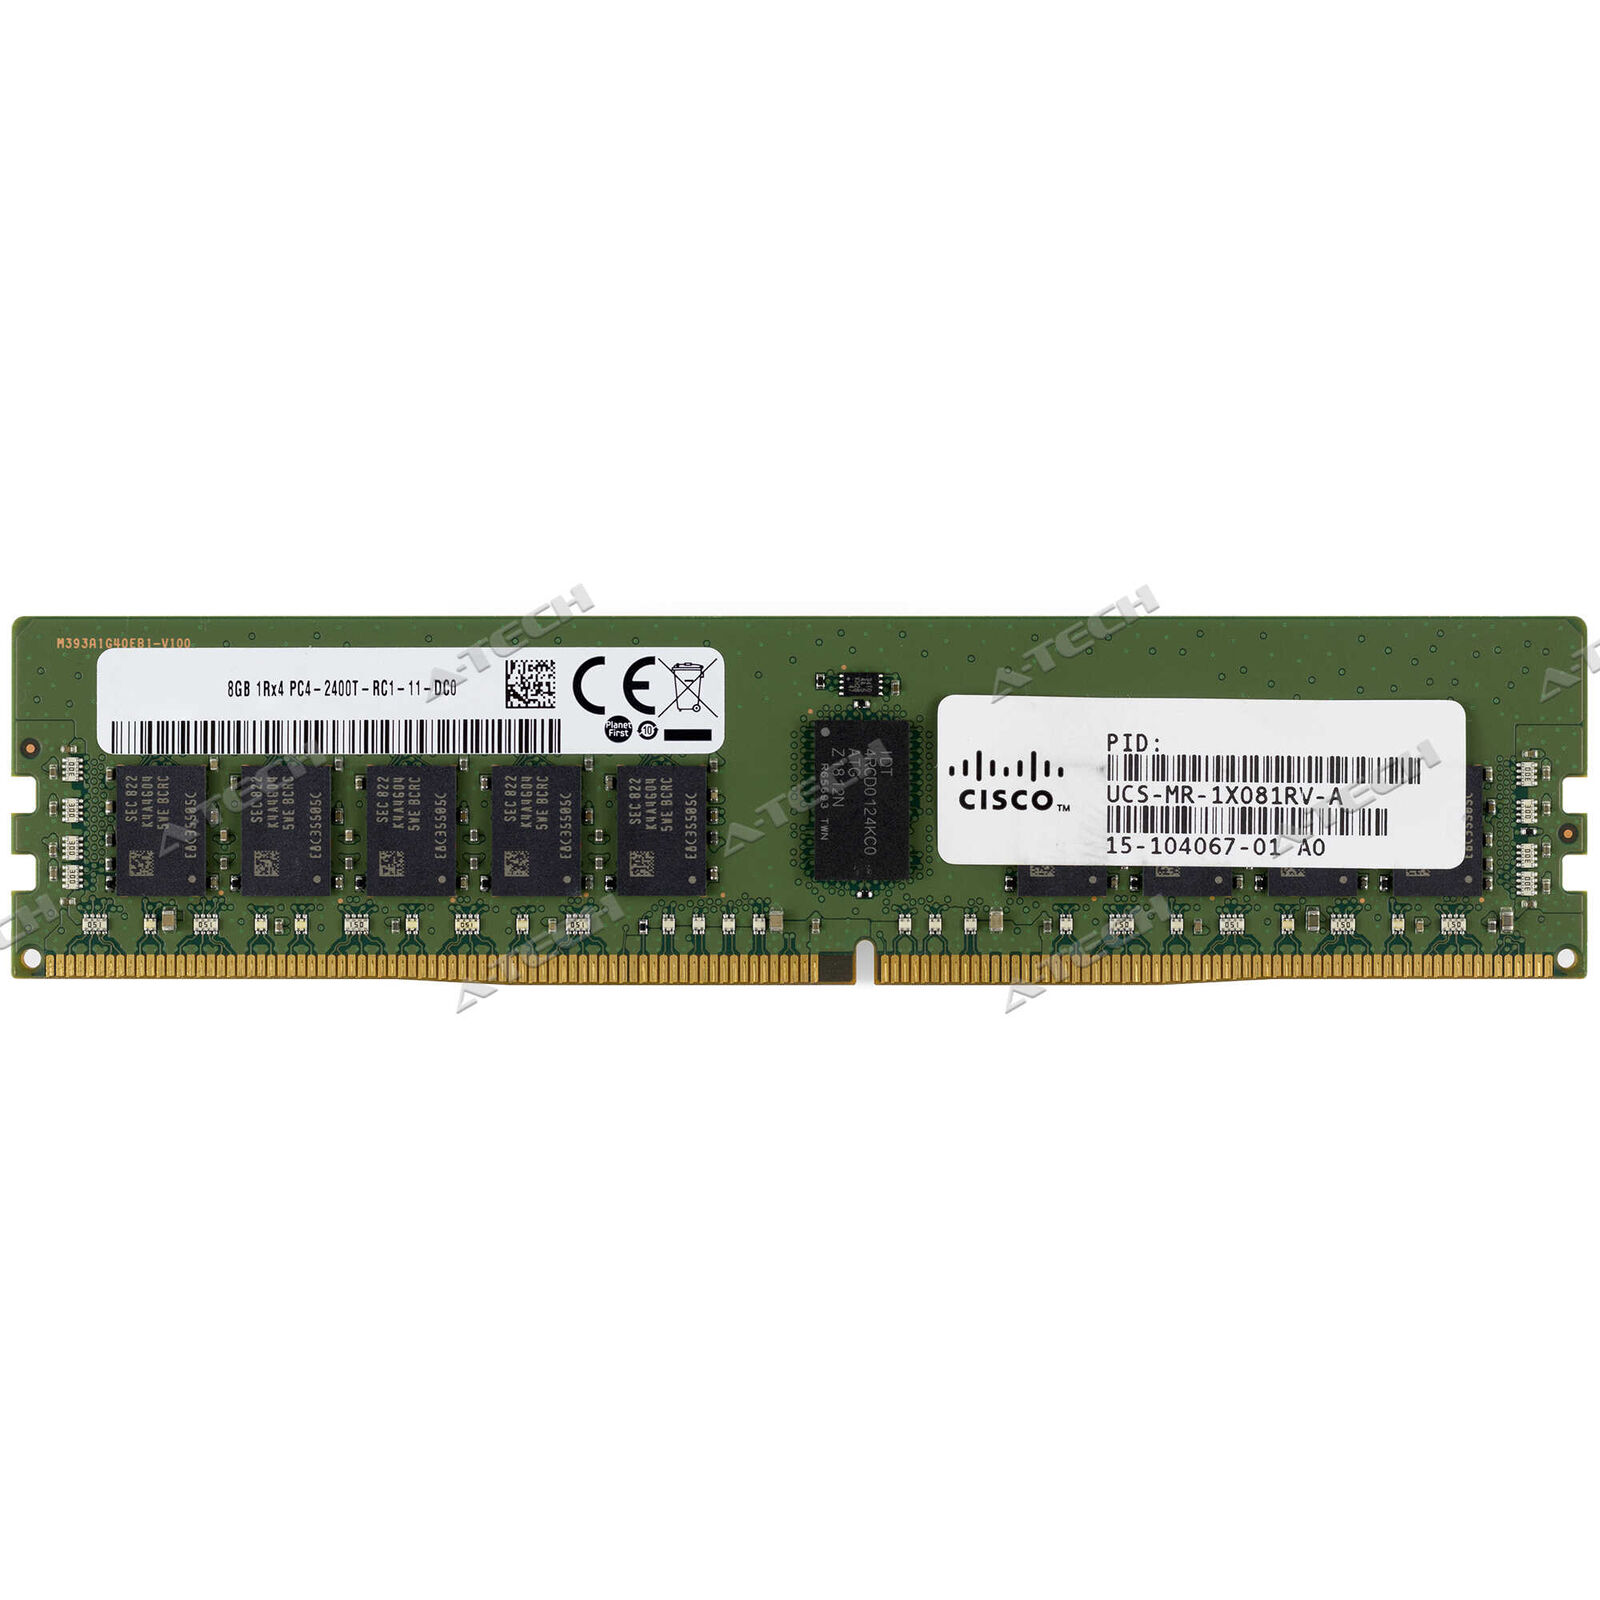 Cisco 8GB DDR4-19200 REG RDIMM UCS-MR-1X081RV-A 15-104067-01 Server Memory RAM